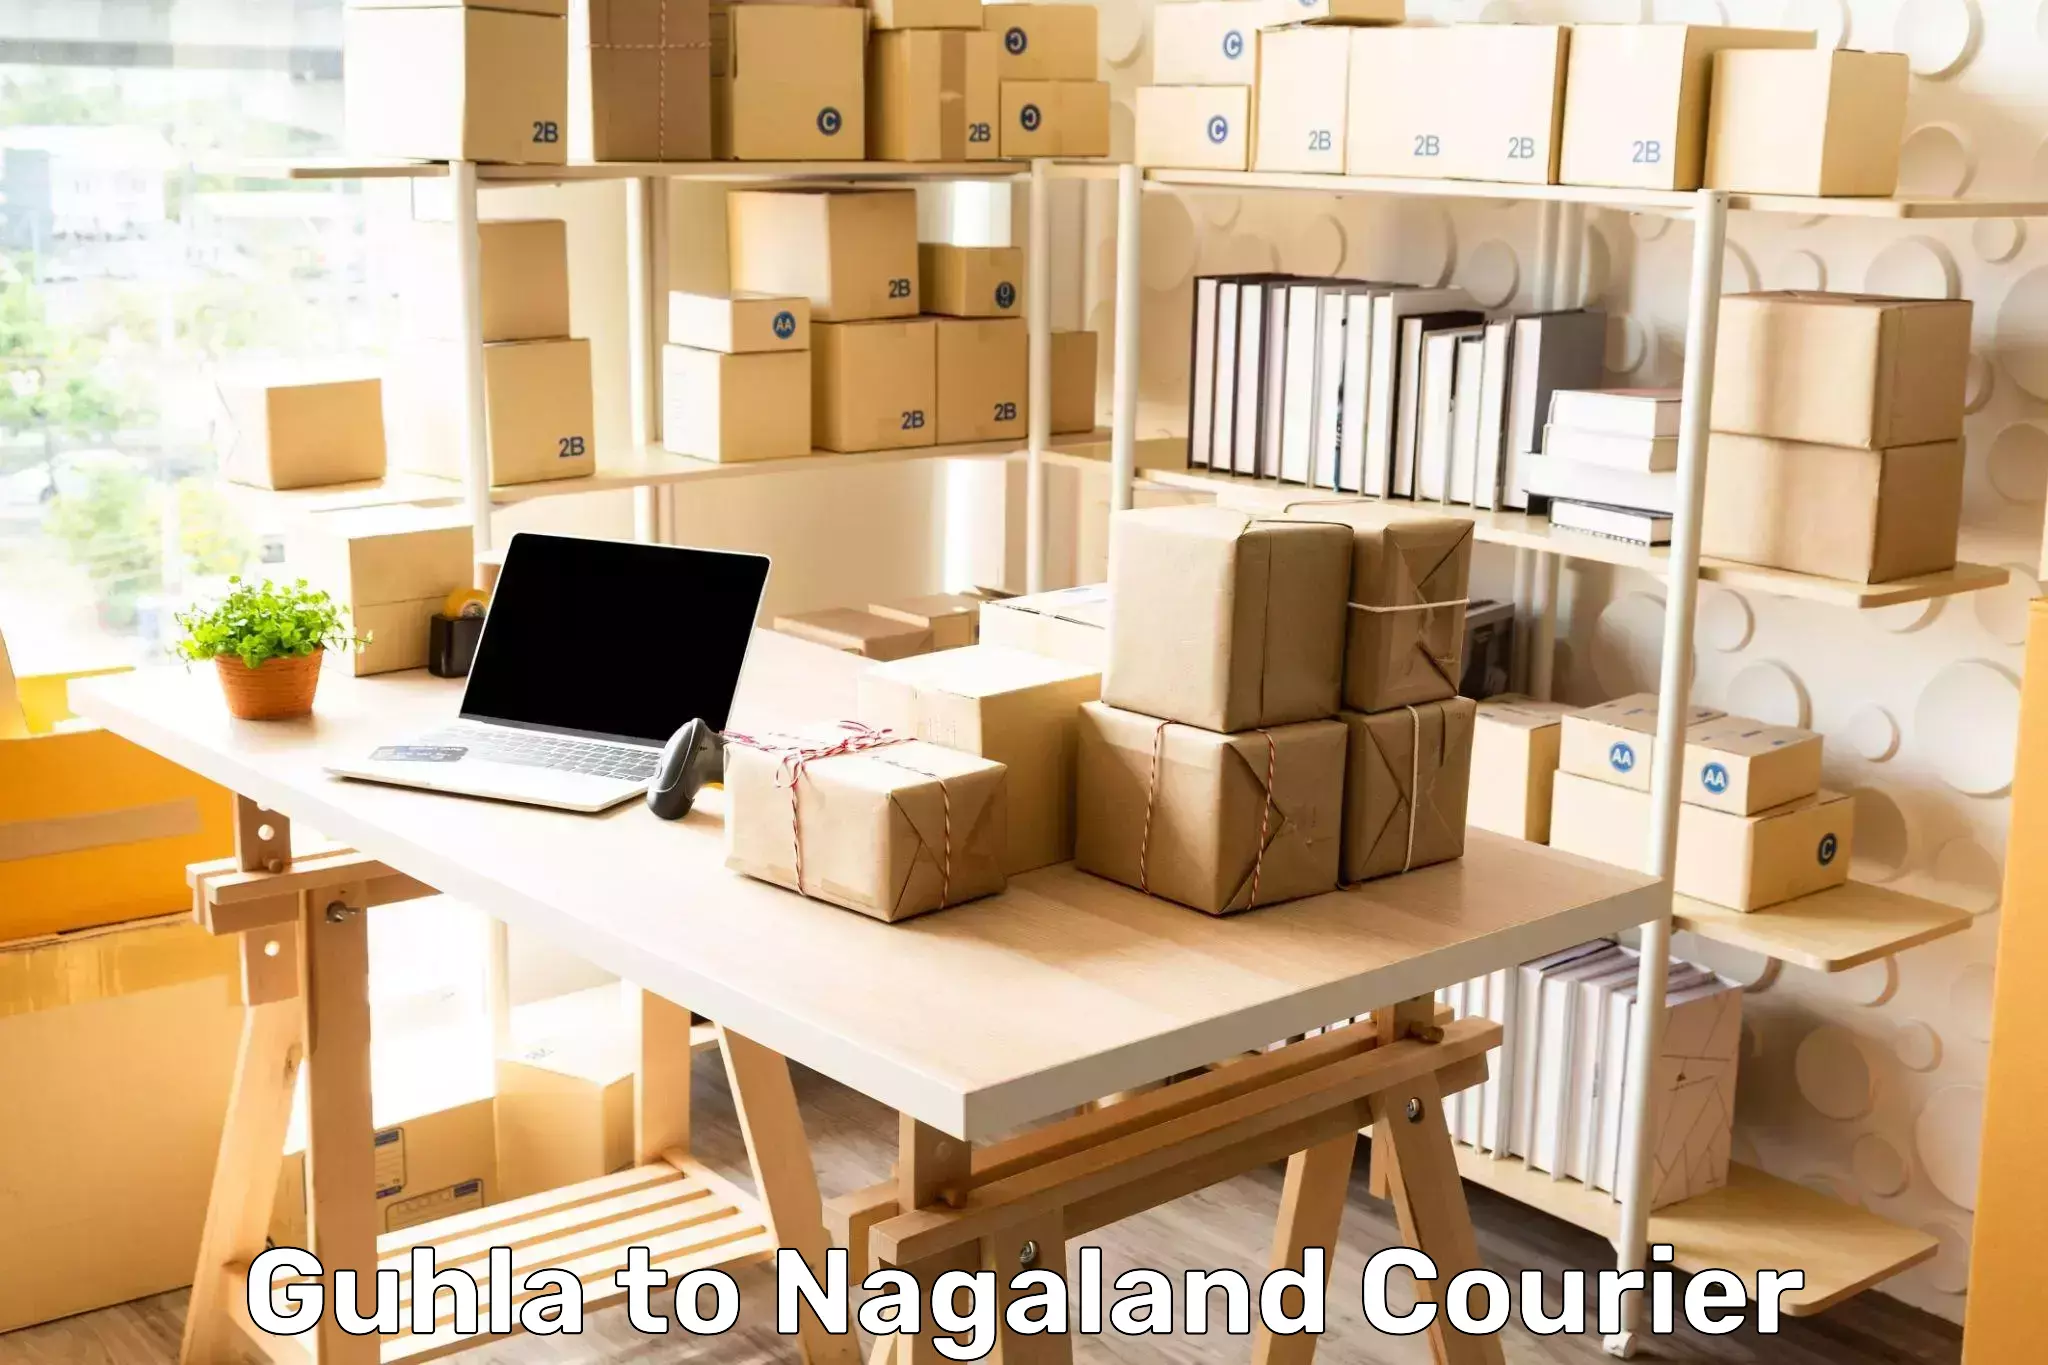 Courier service innovation Guhla to Nagaland